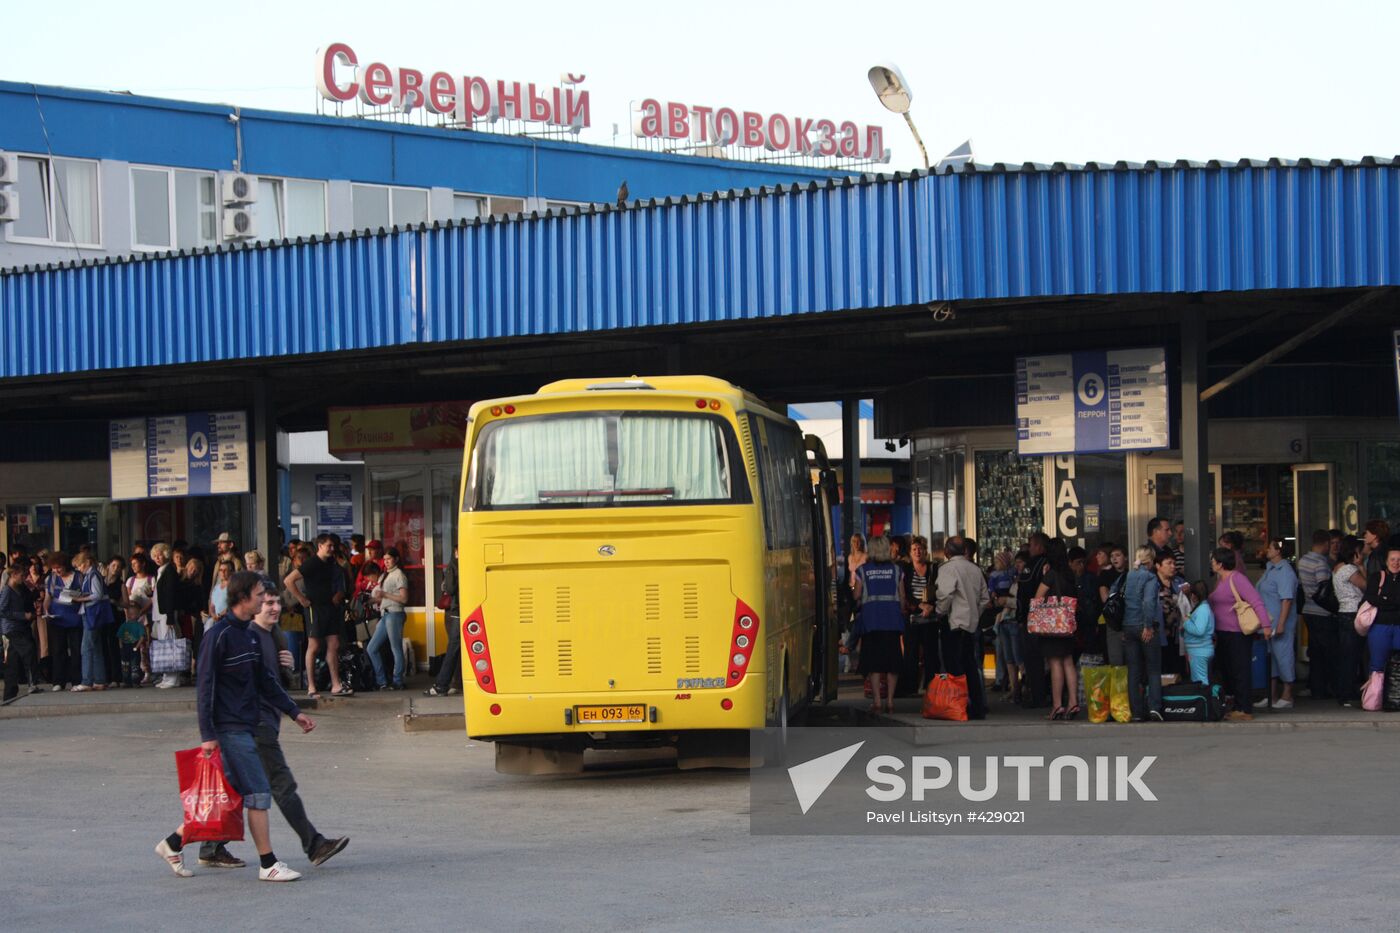 Yekaterinburg North Bus Station